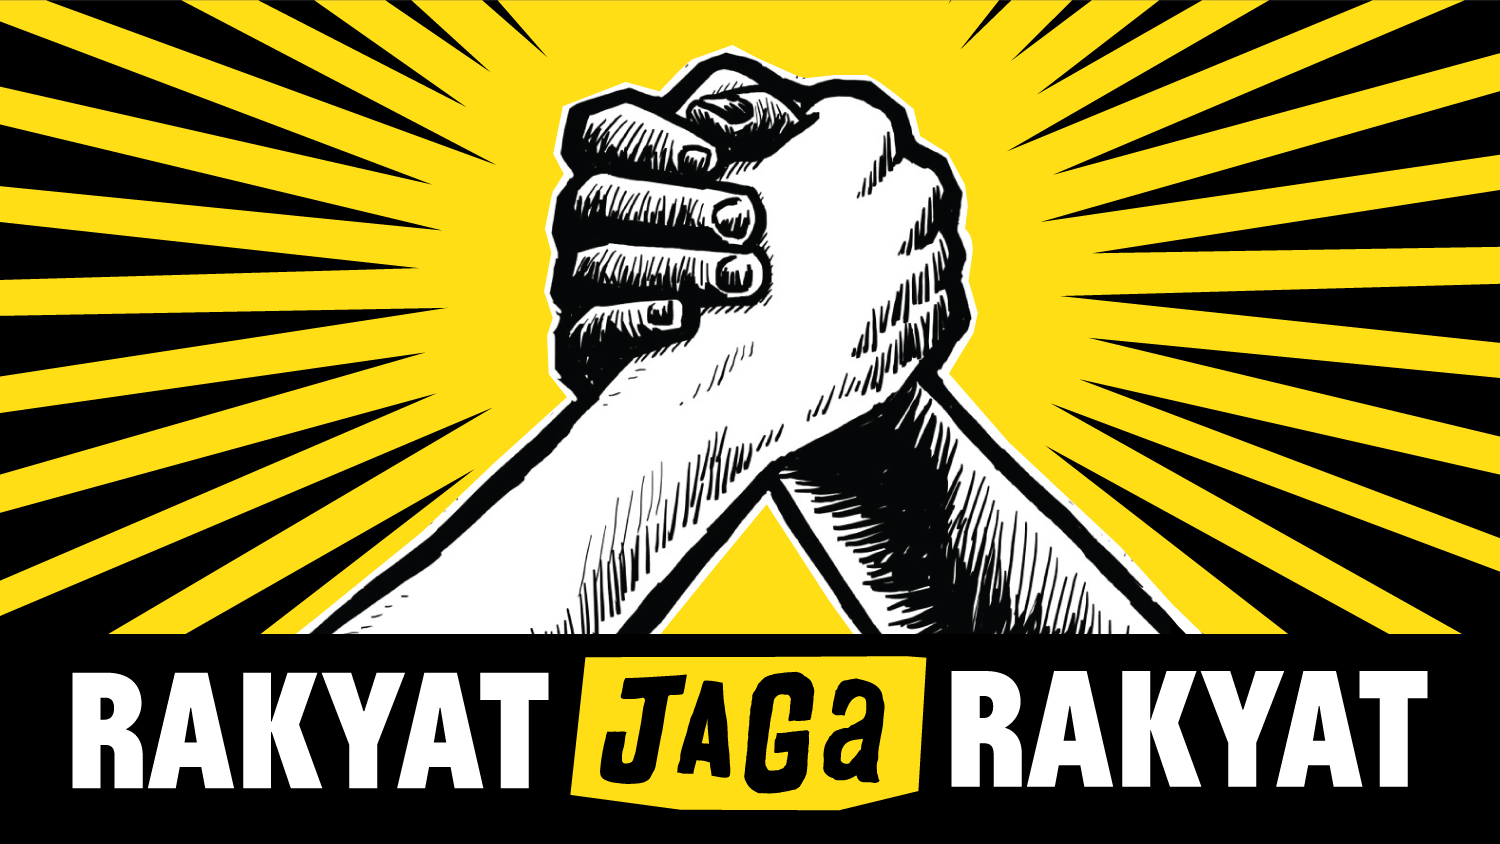 : "#RakyatJagaRakyat 👊… "